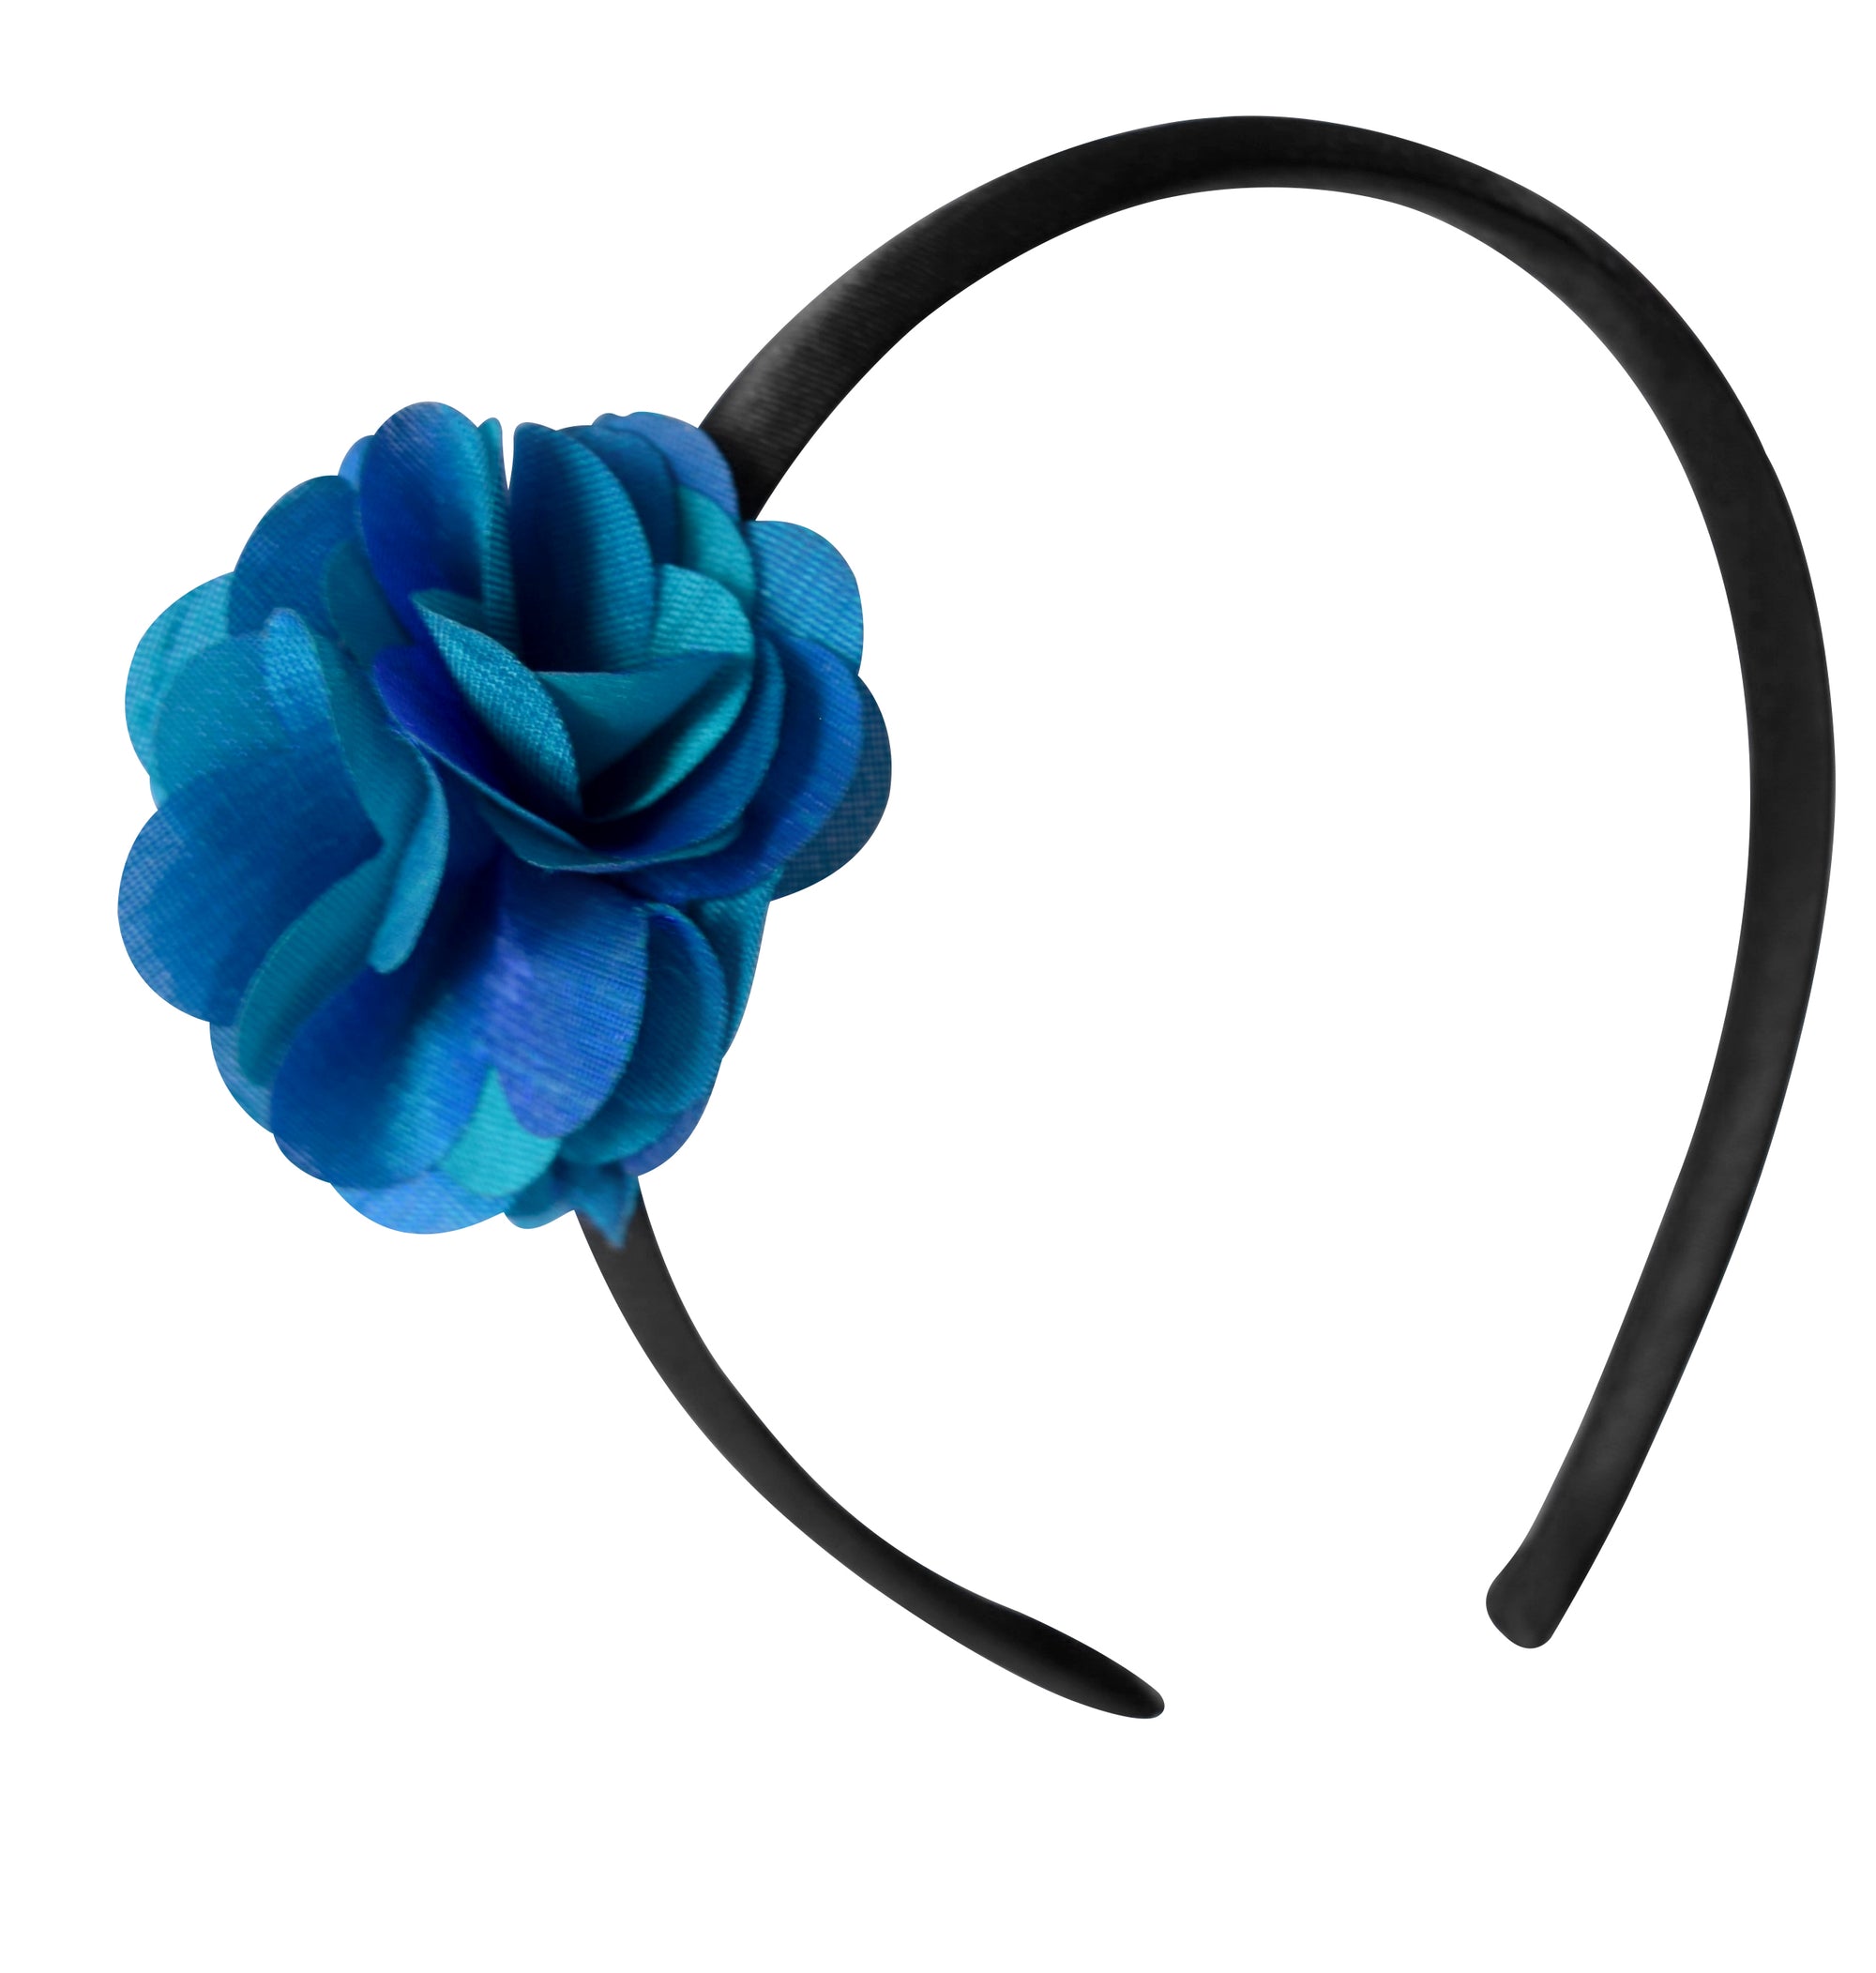 Hair band with Peacock Blue colour satin Flower on Black Satin